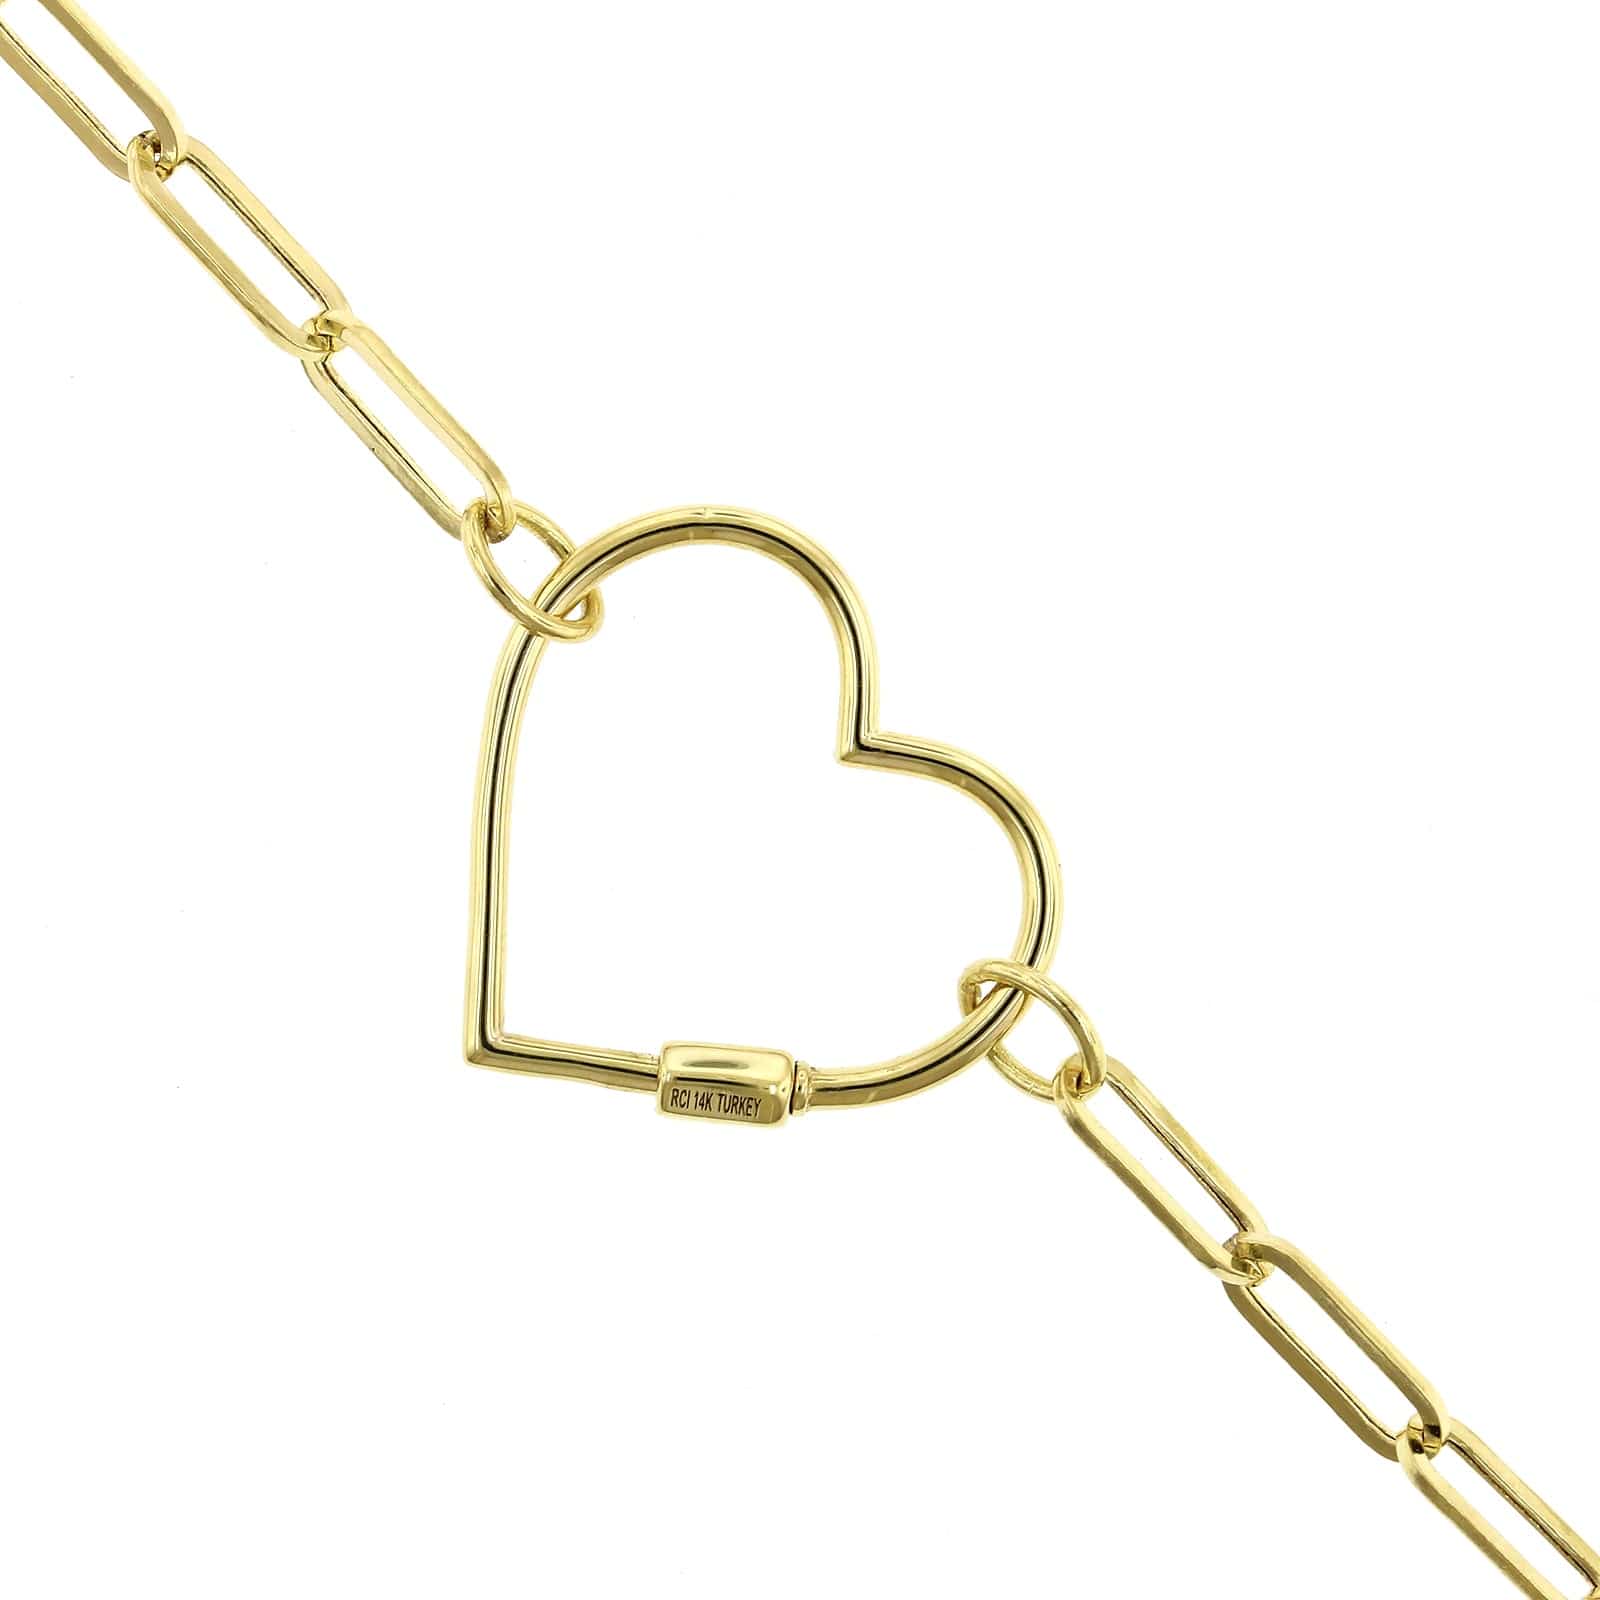 Heart Lock Necklace Gold - Eva Bryn Shoetique